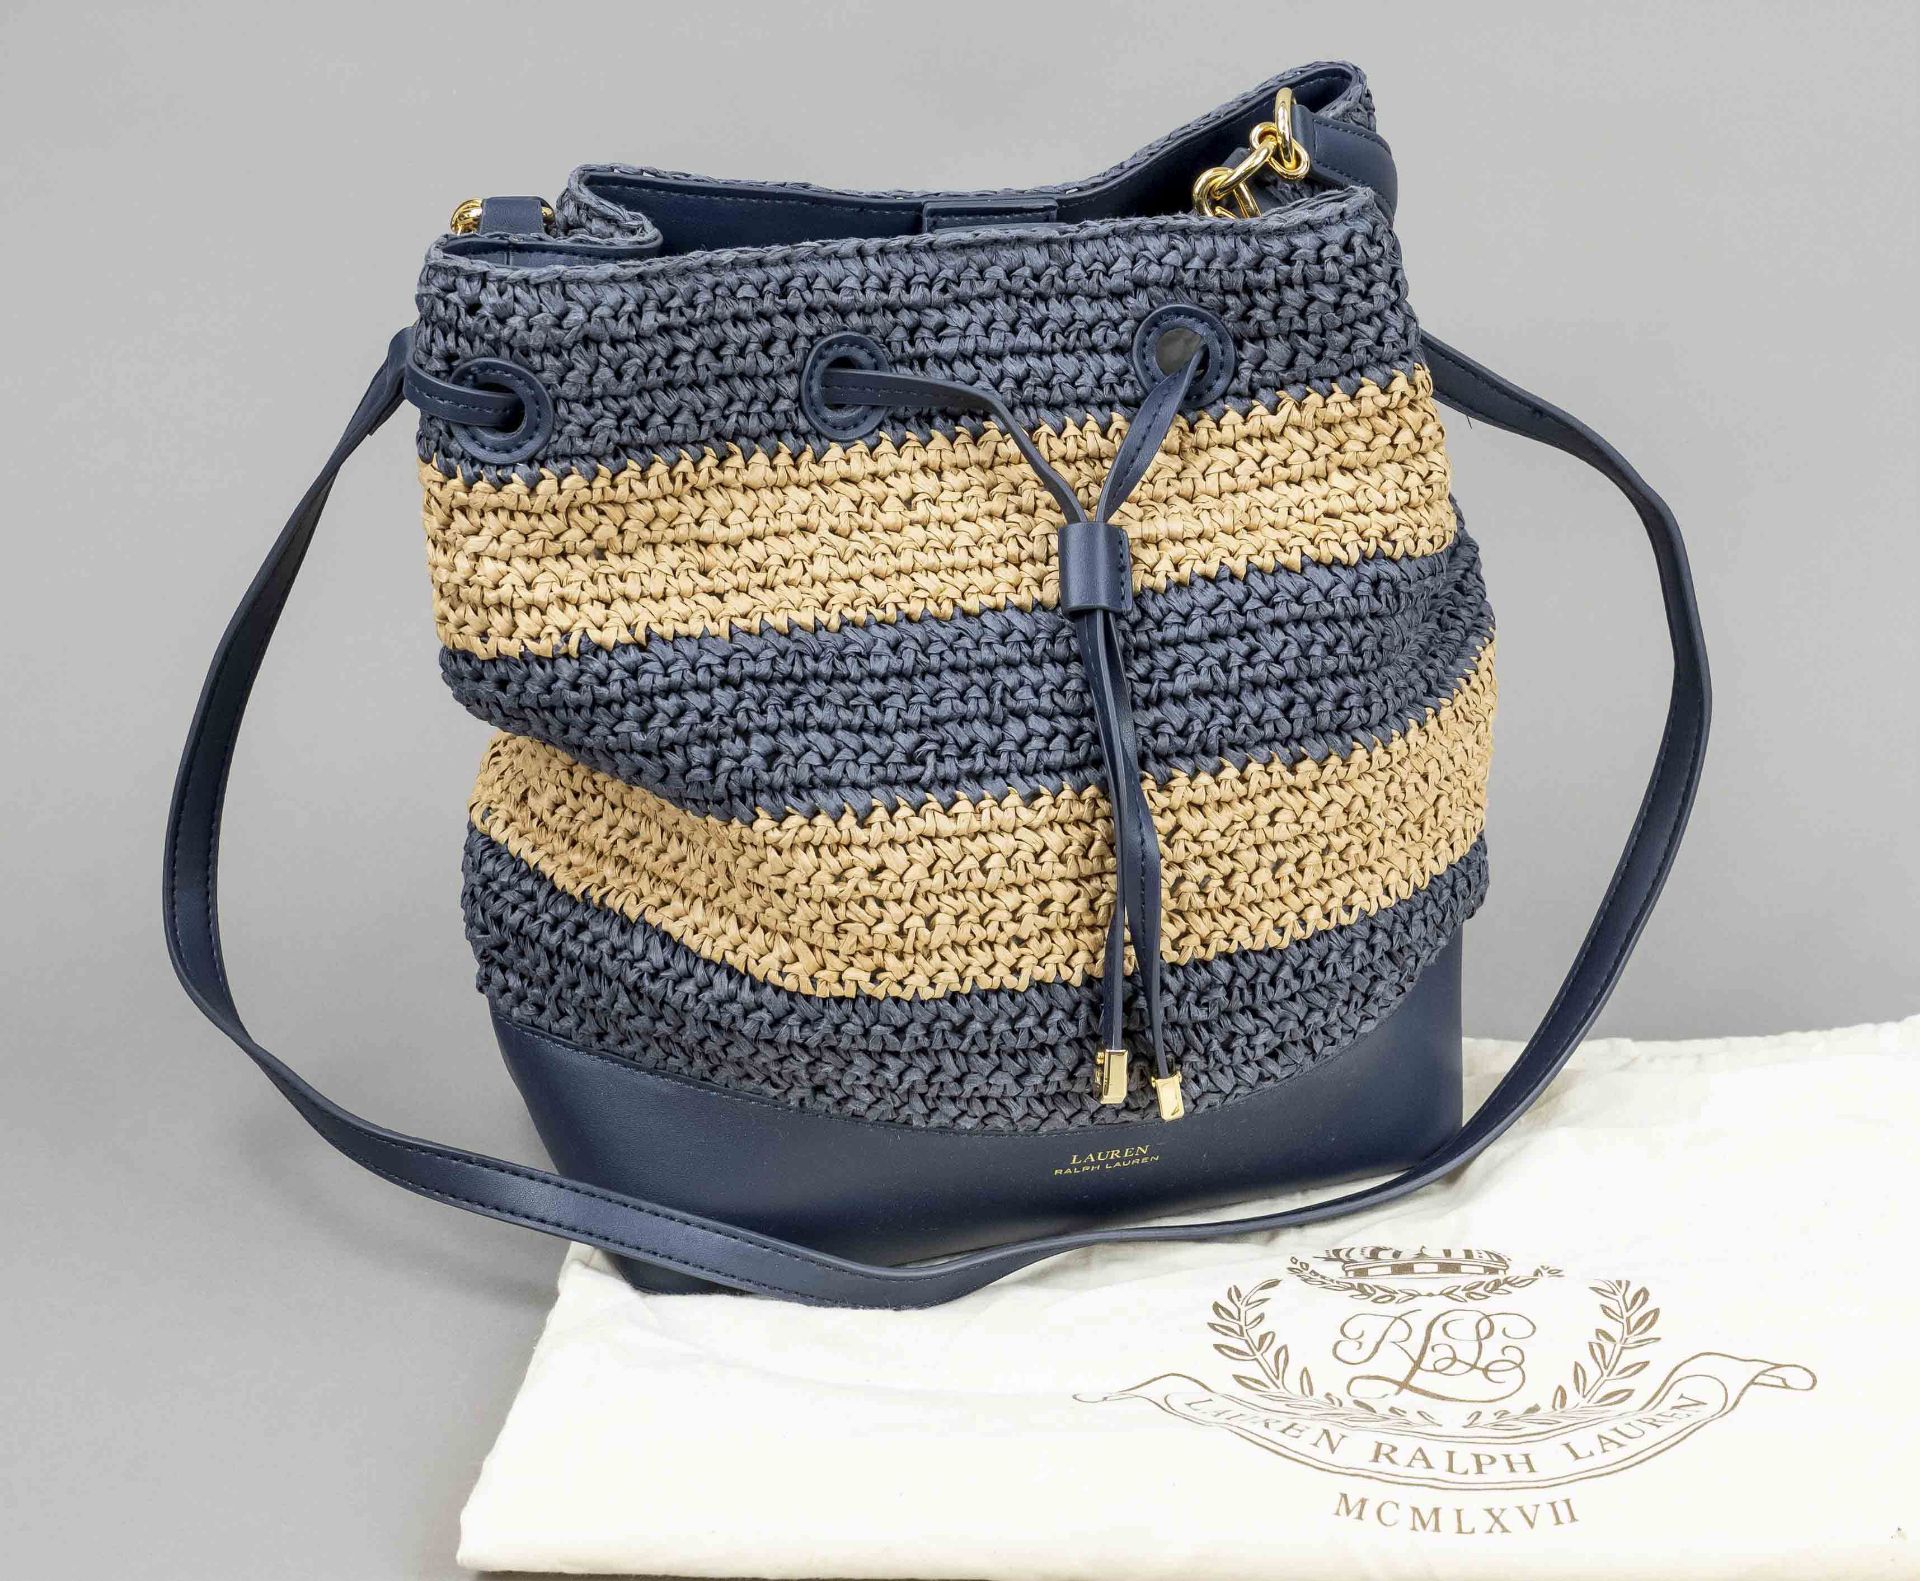 Ralph Lauren, Dryden Debby Straw Drawstring Bag, crocheted straw in beige and dark blue with wide